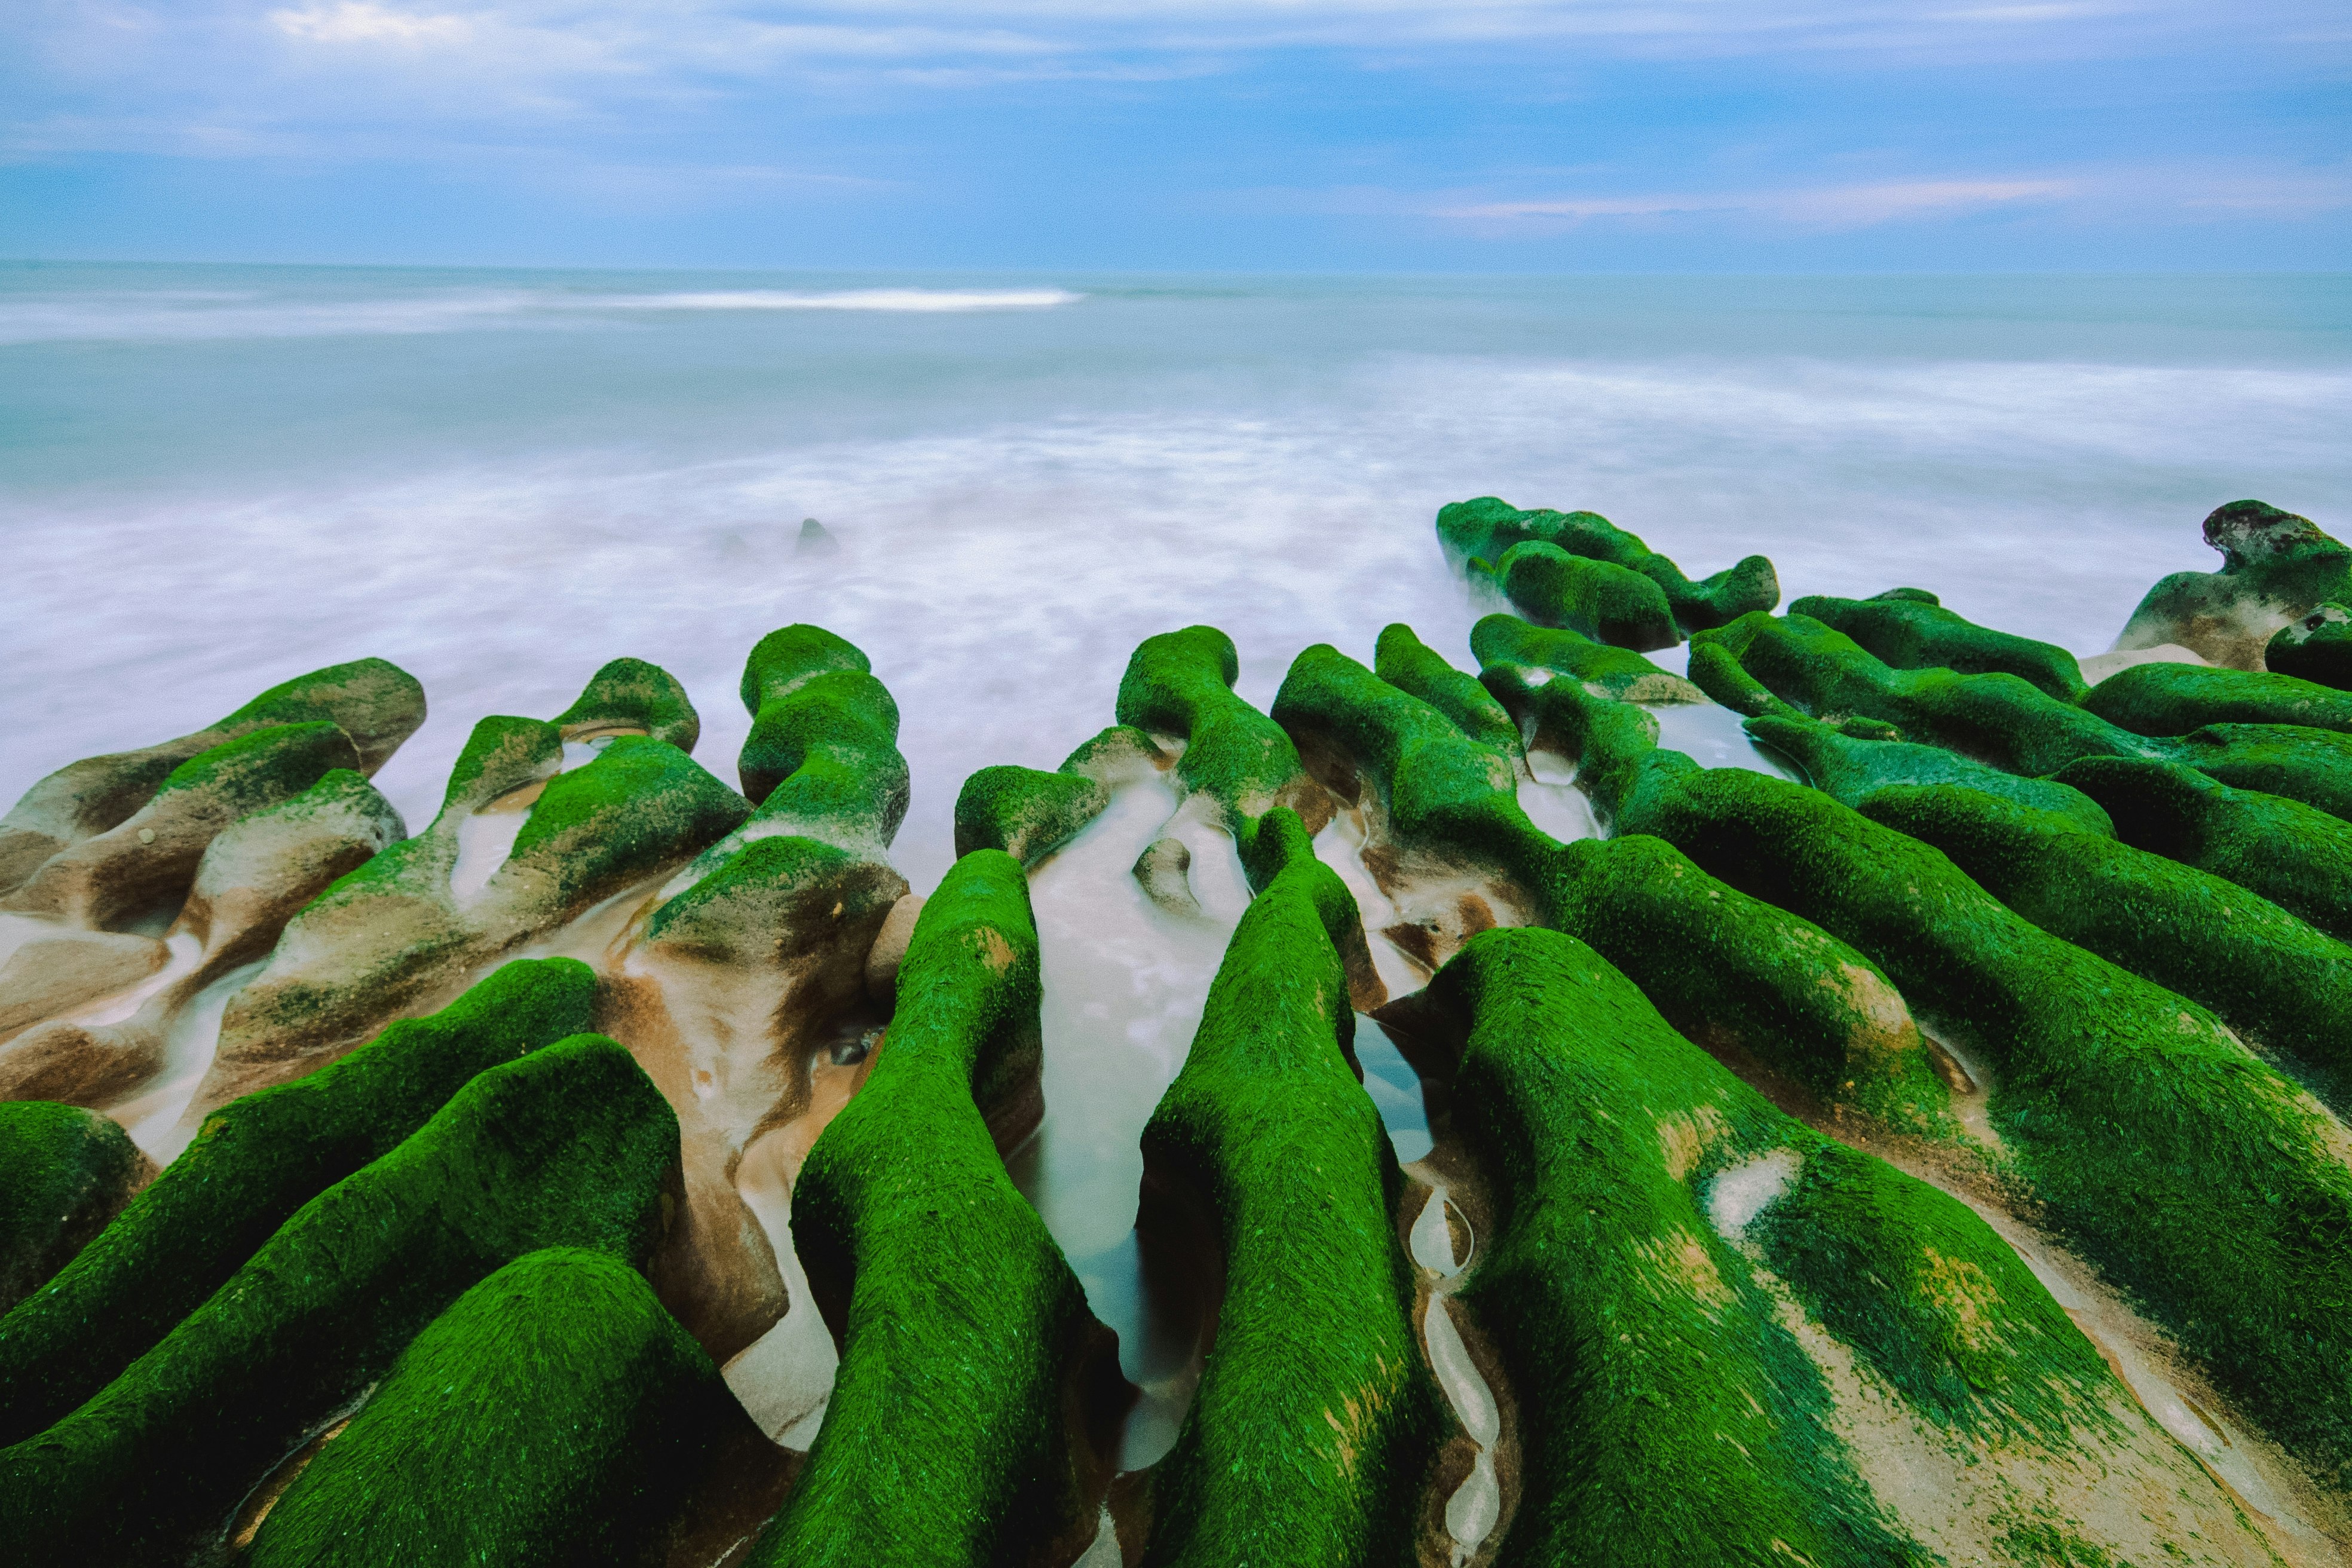 Green algae covering rocks on the shoreline